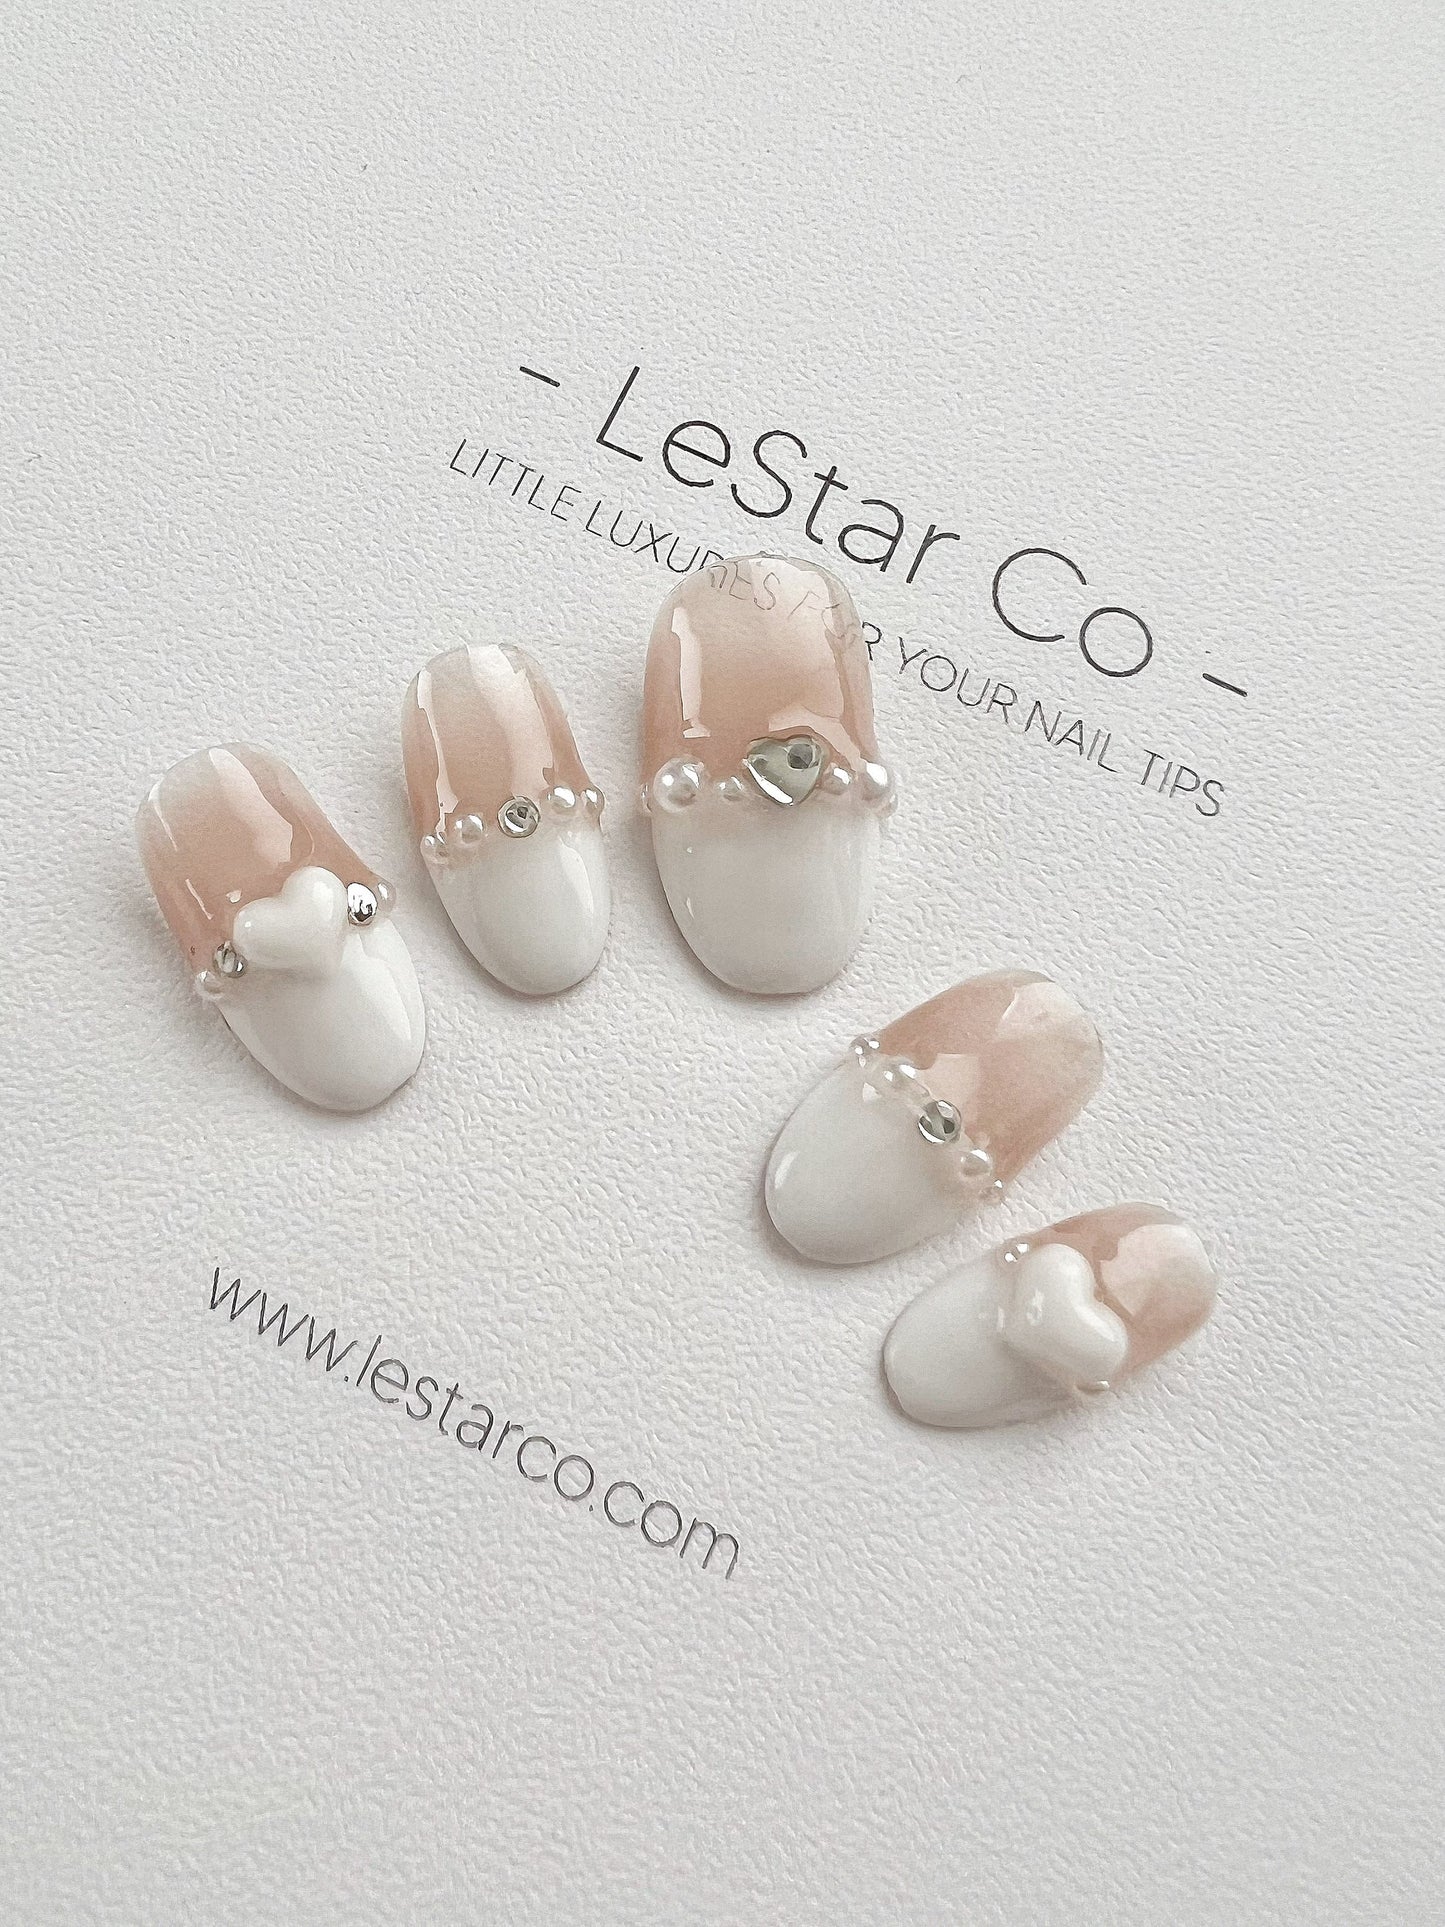 Reusable Lilydale Nails Premium Short Press on Nails Gel Manicure | Fake Nails | Handmade | Lestarco faux nails XX226